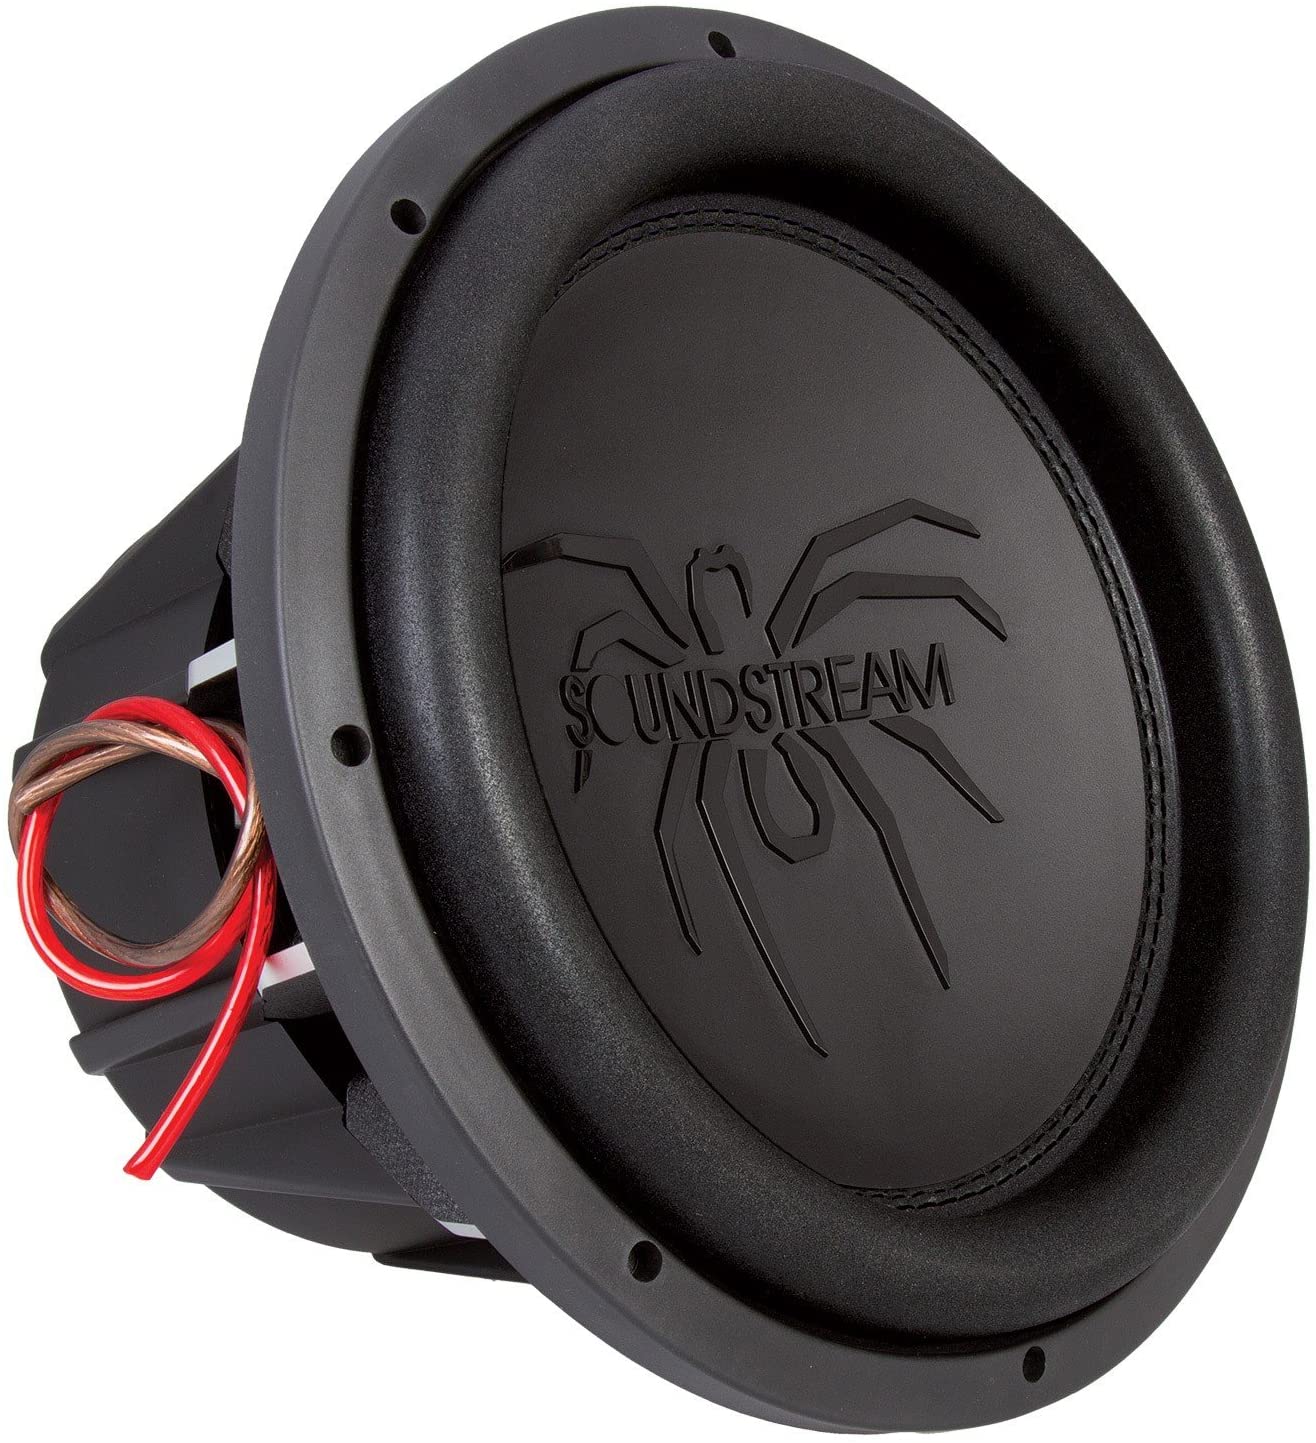 Soundstream T5.152 Best 15 inch Subwoofer Under $200